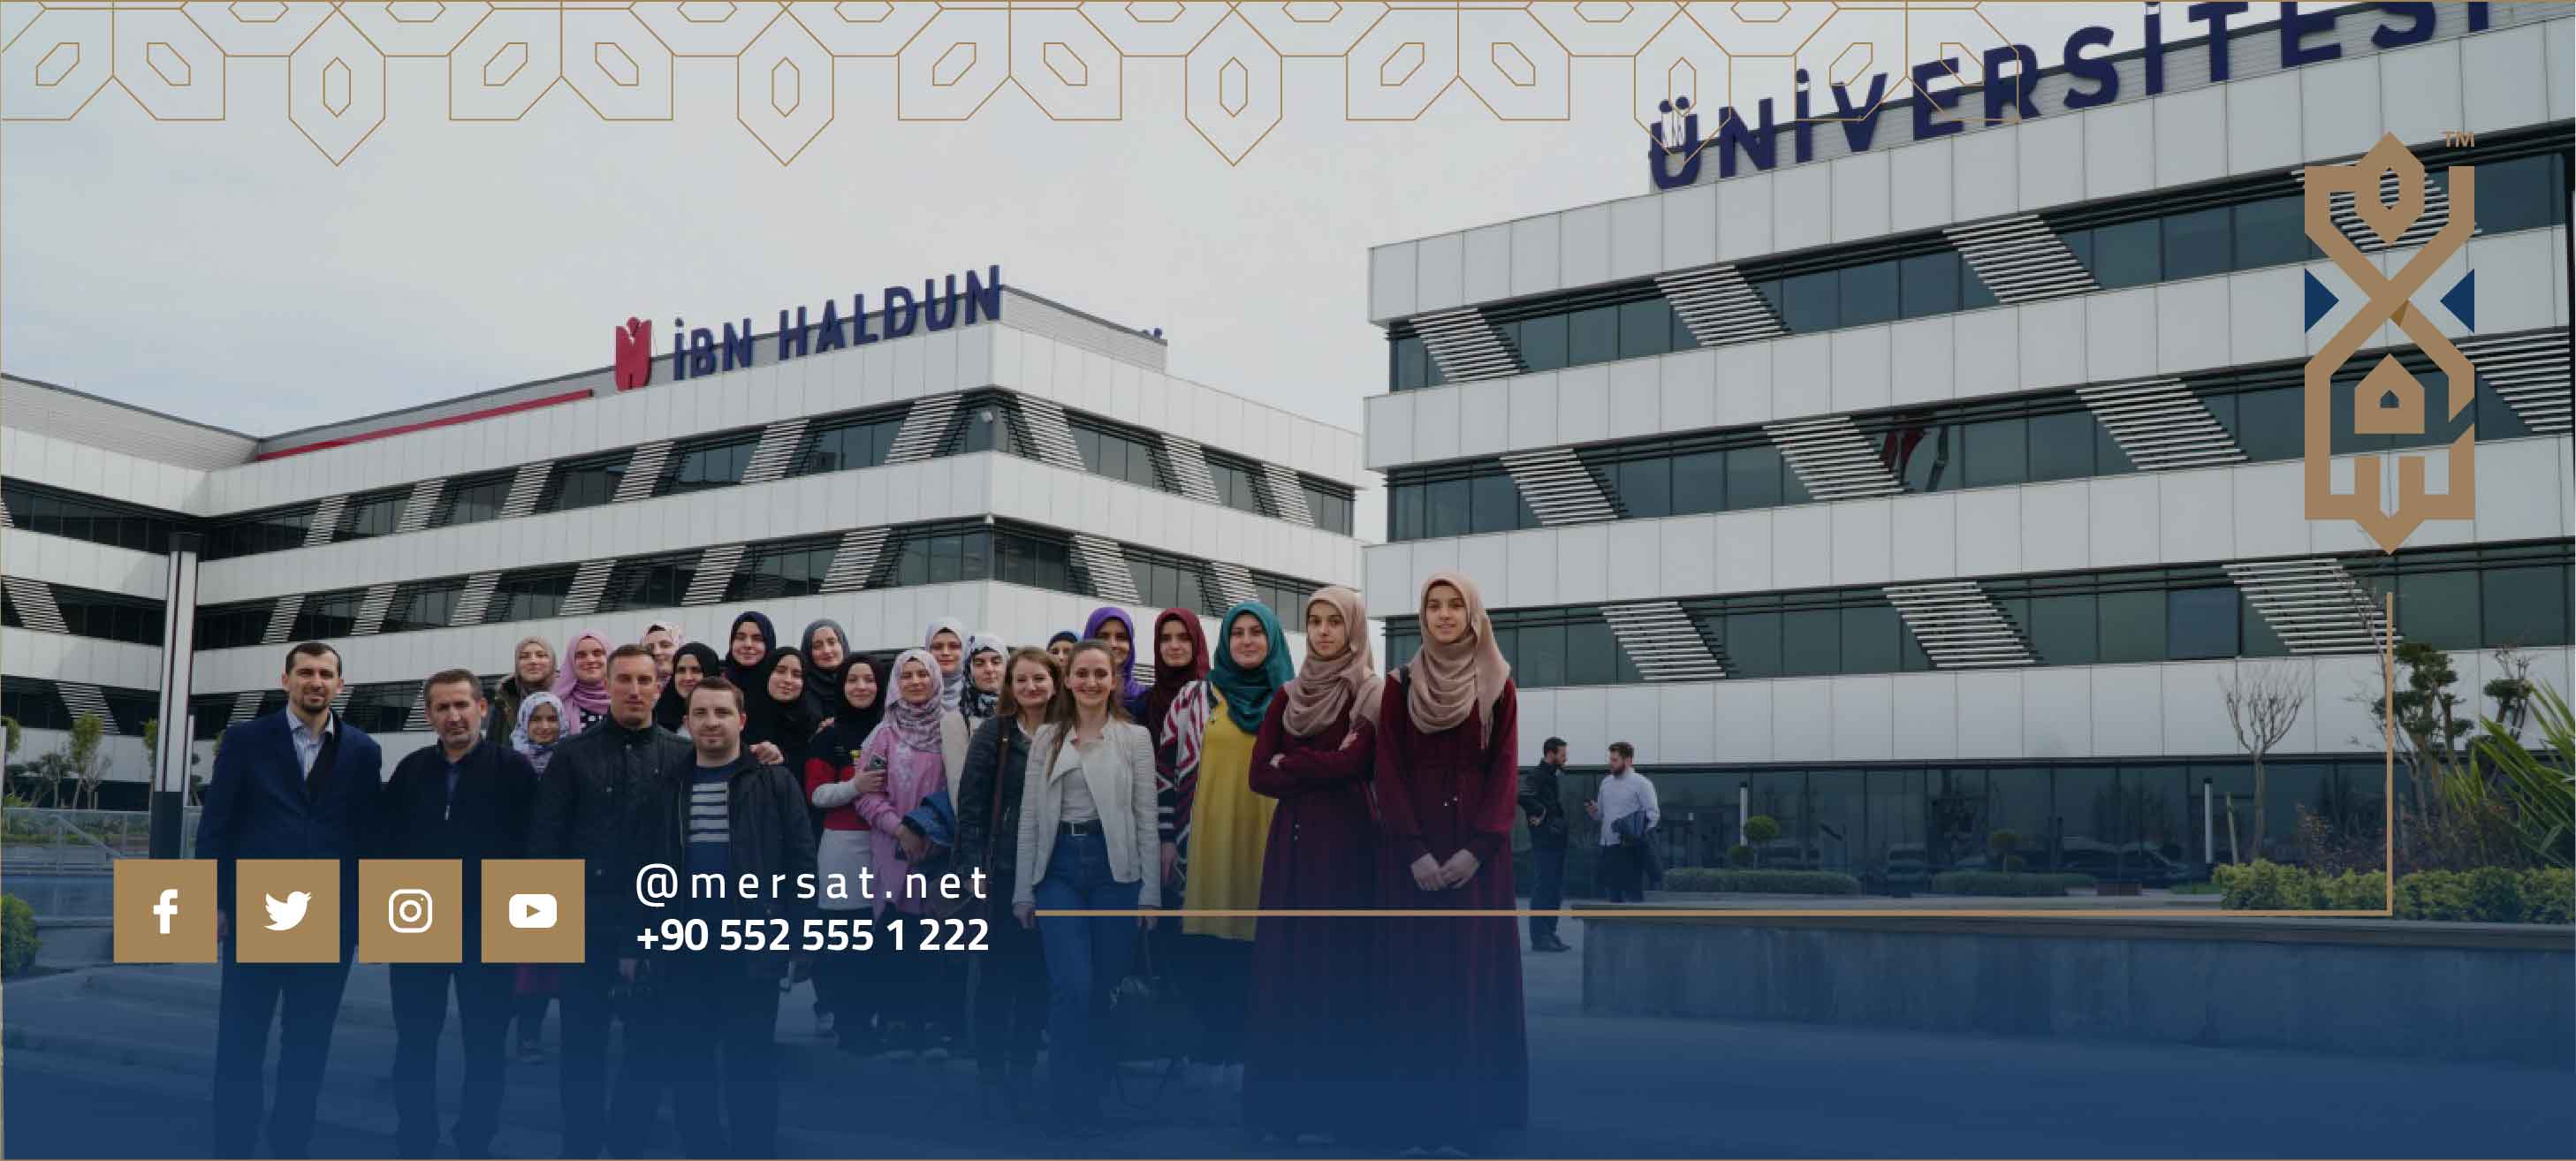 Turkish universities are Arabic speaking